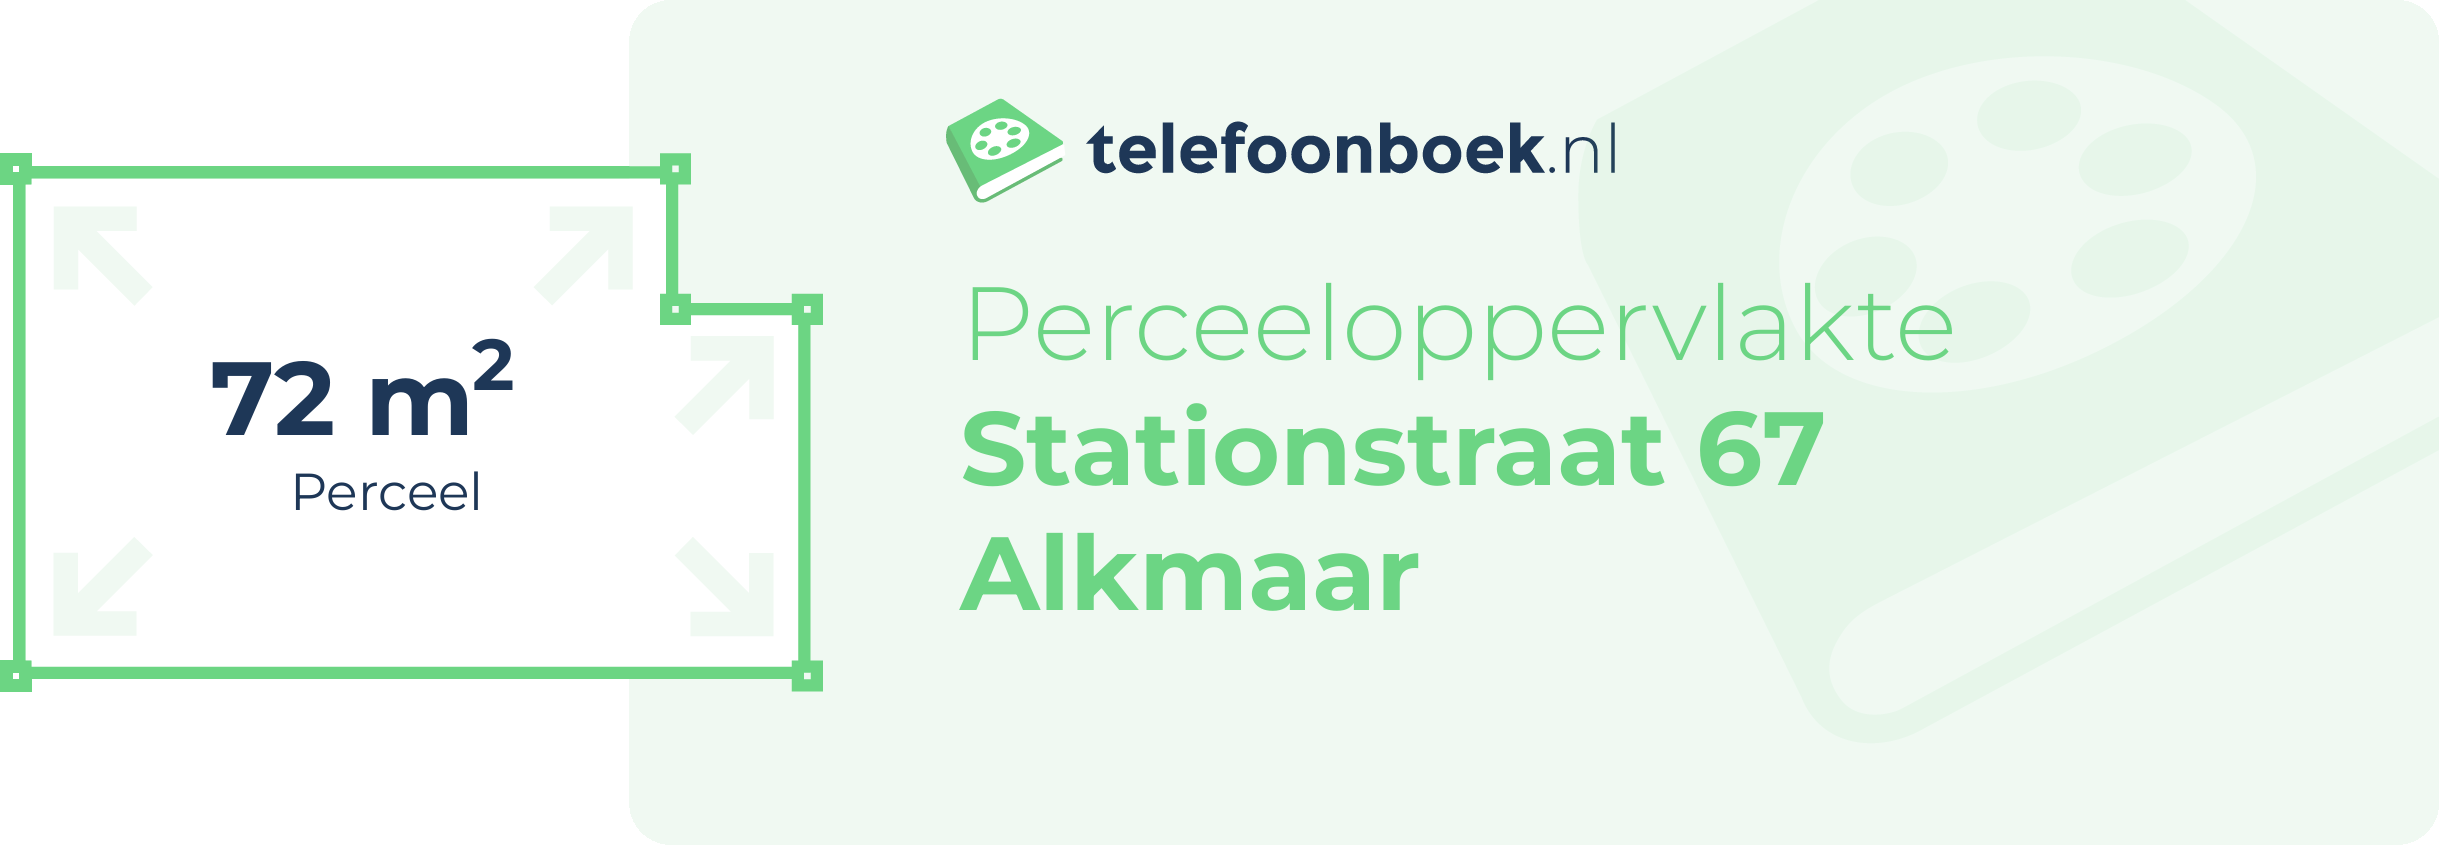 Perceeloppervlakte Stationstraat 67 Alkmaar